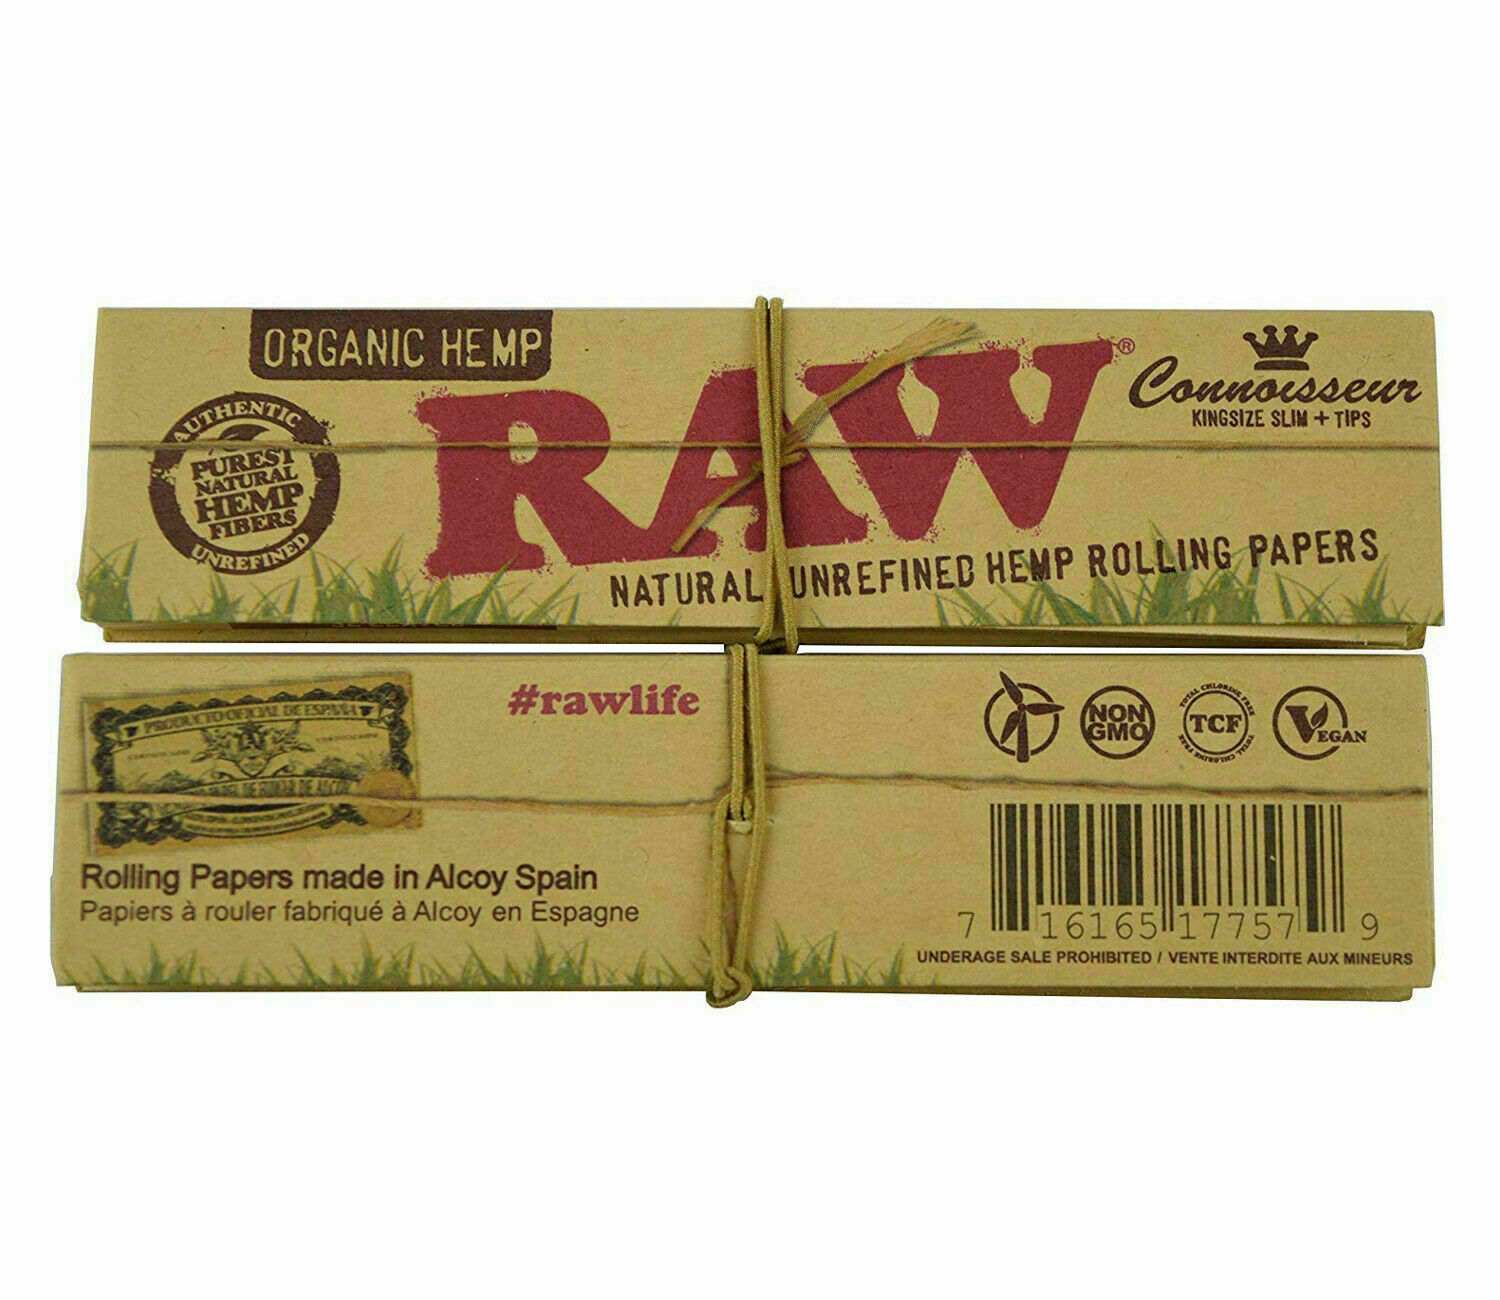 RAW Organic Hemp Connoisseur King Size | UK Vape World